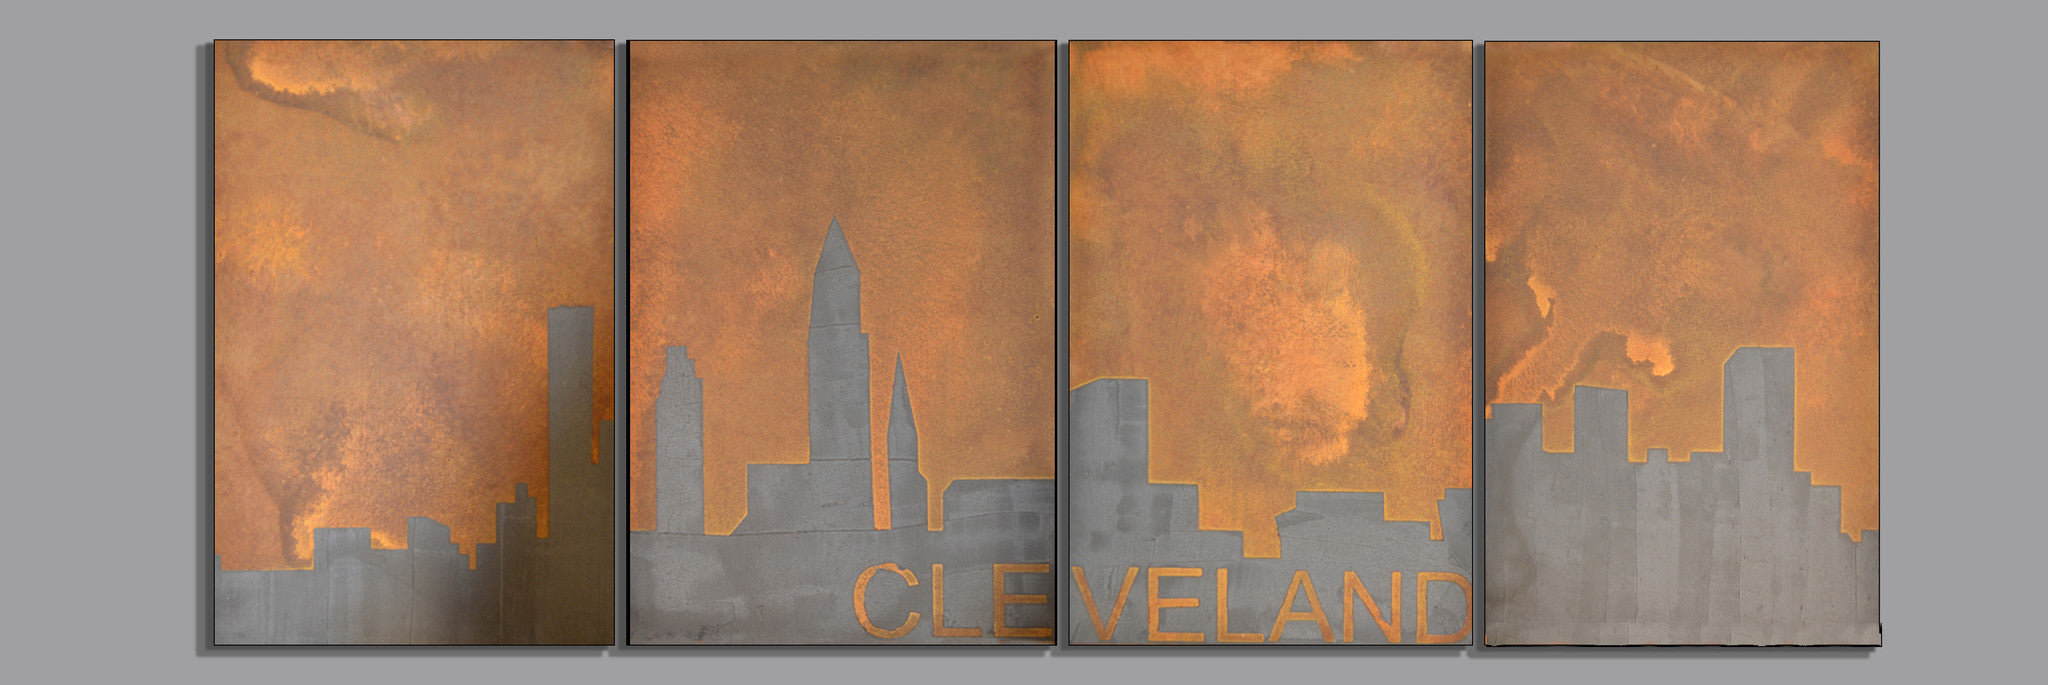 Cleveland Skyline on Blocks - Shirley's Loft - 2